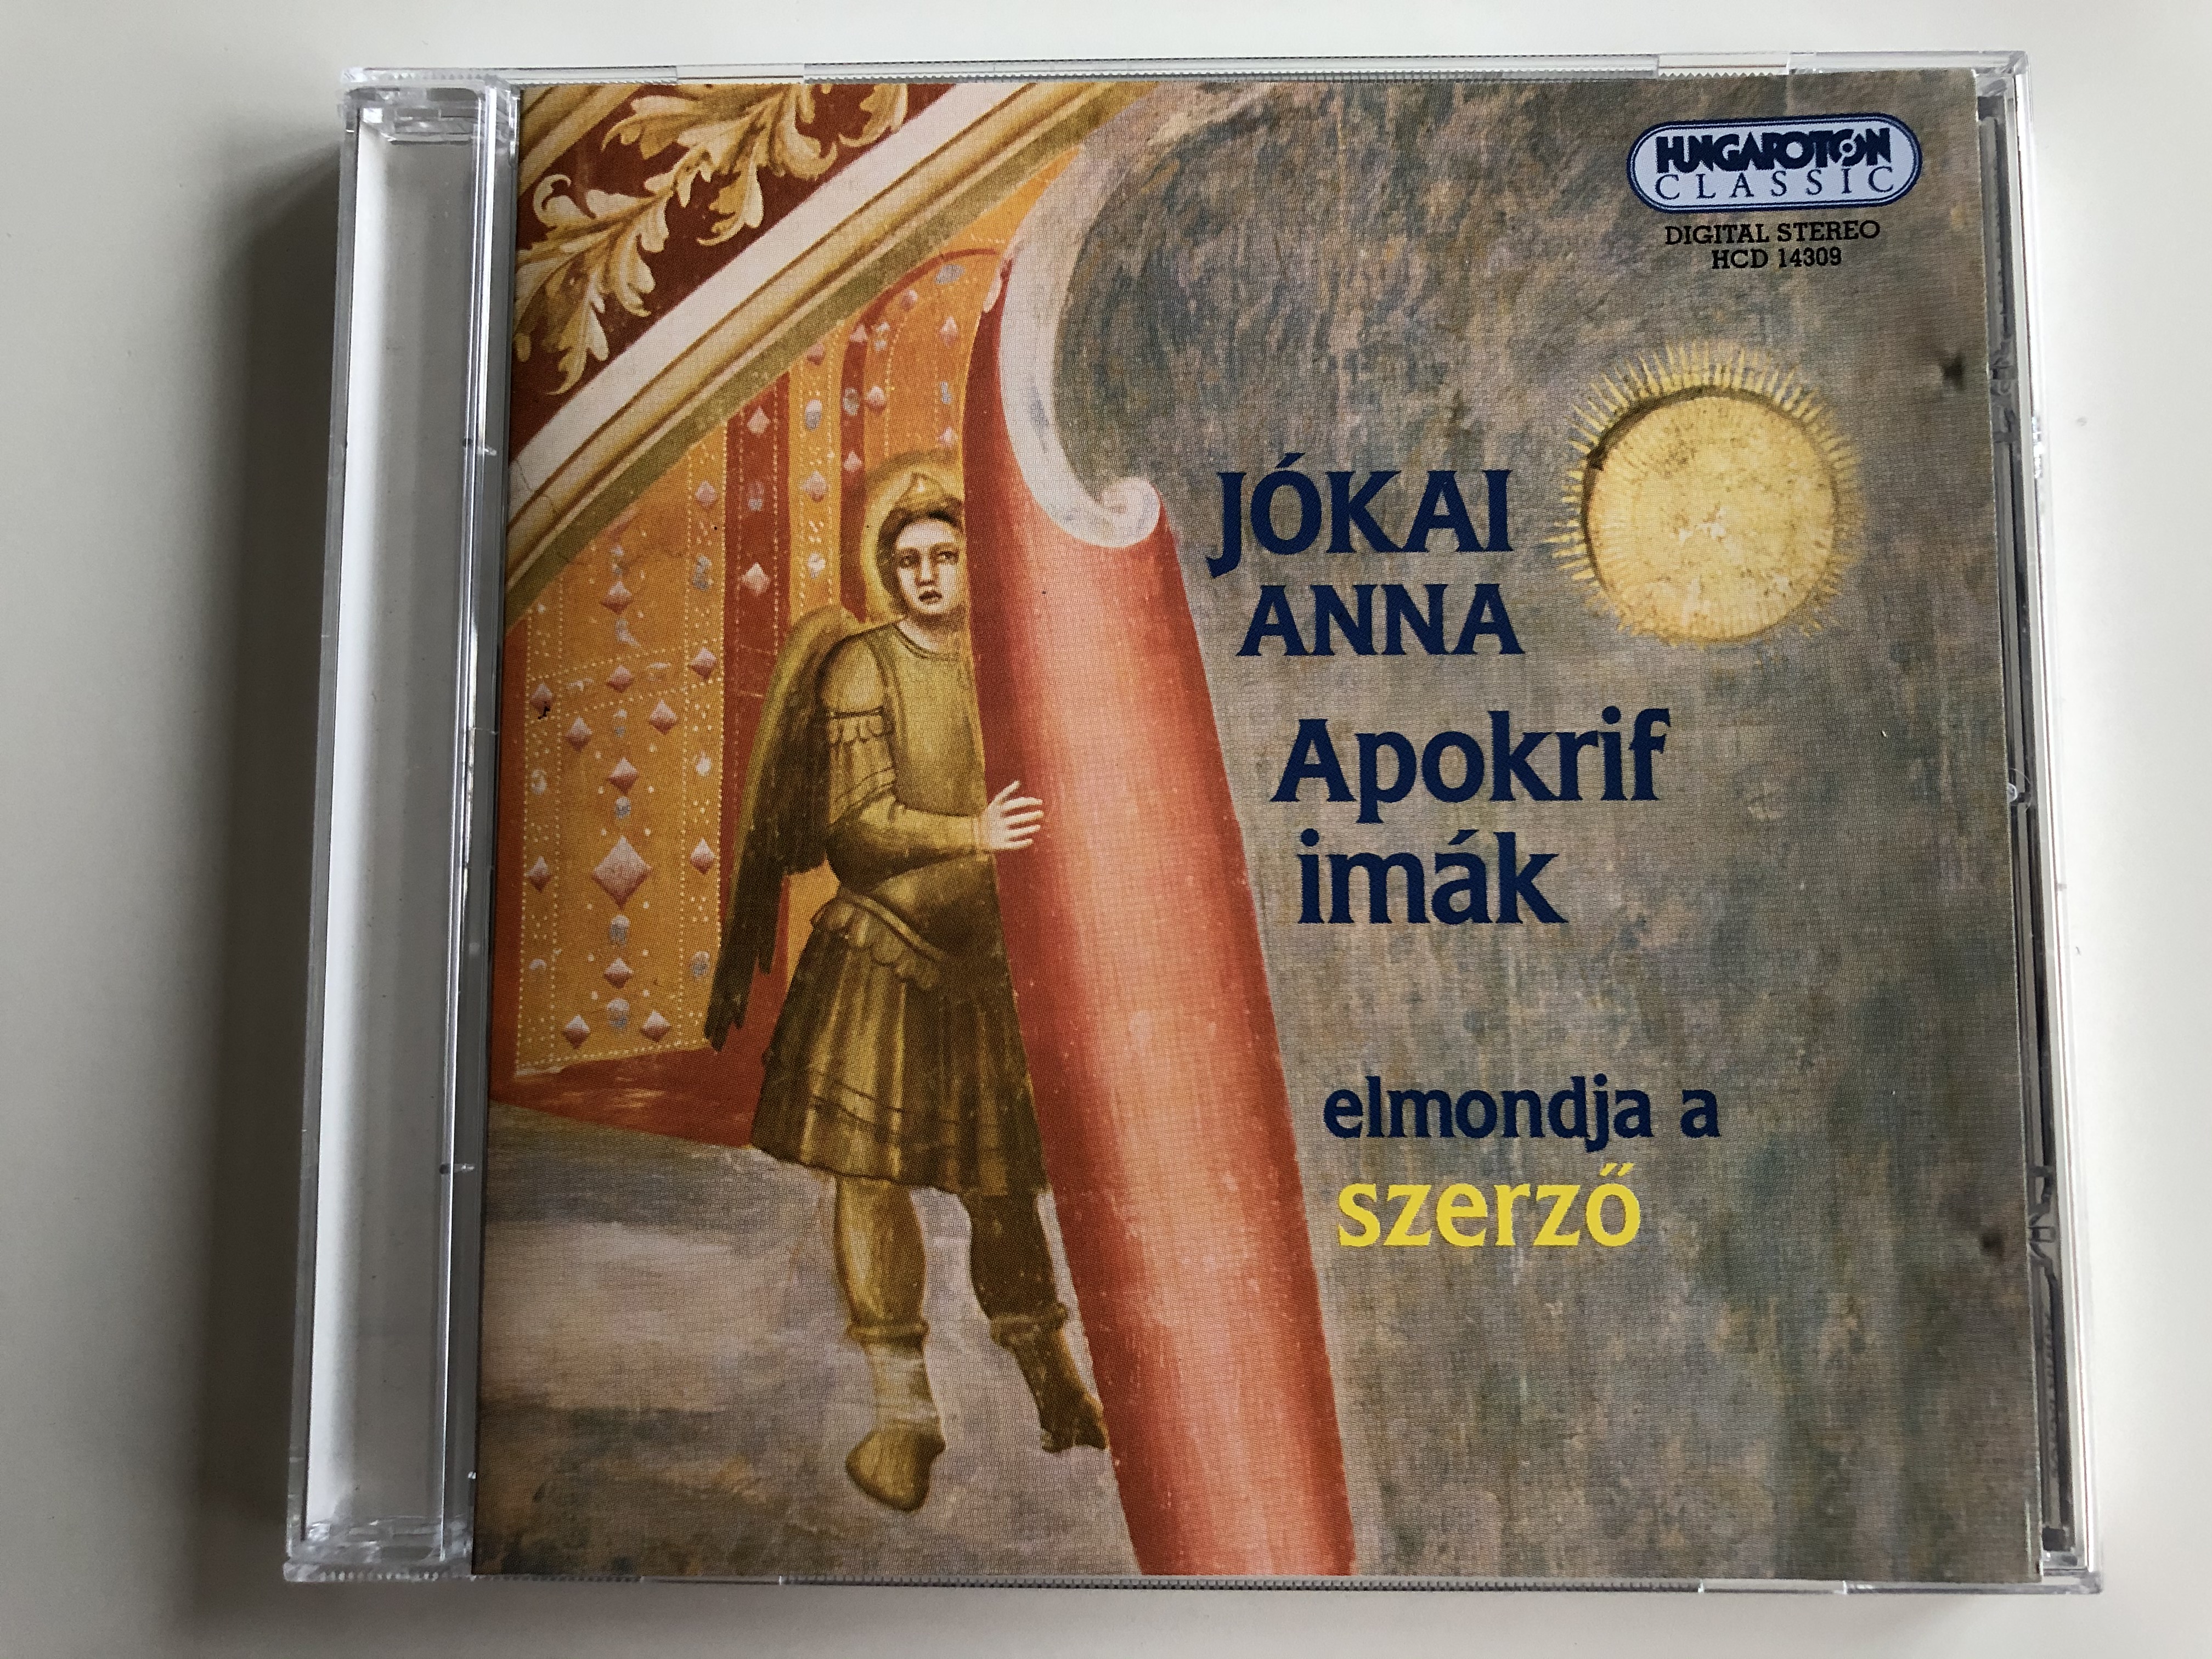 jokai-anna-apokrif-imak-elmondja-a-szerzo-hungaroton-classic-audio-cd-2002-stereo-hcd-14309-1-.jpg